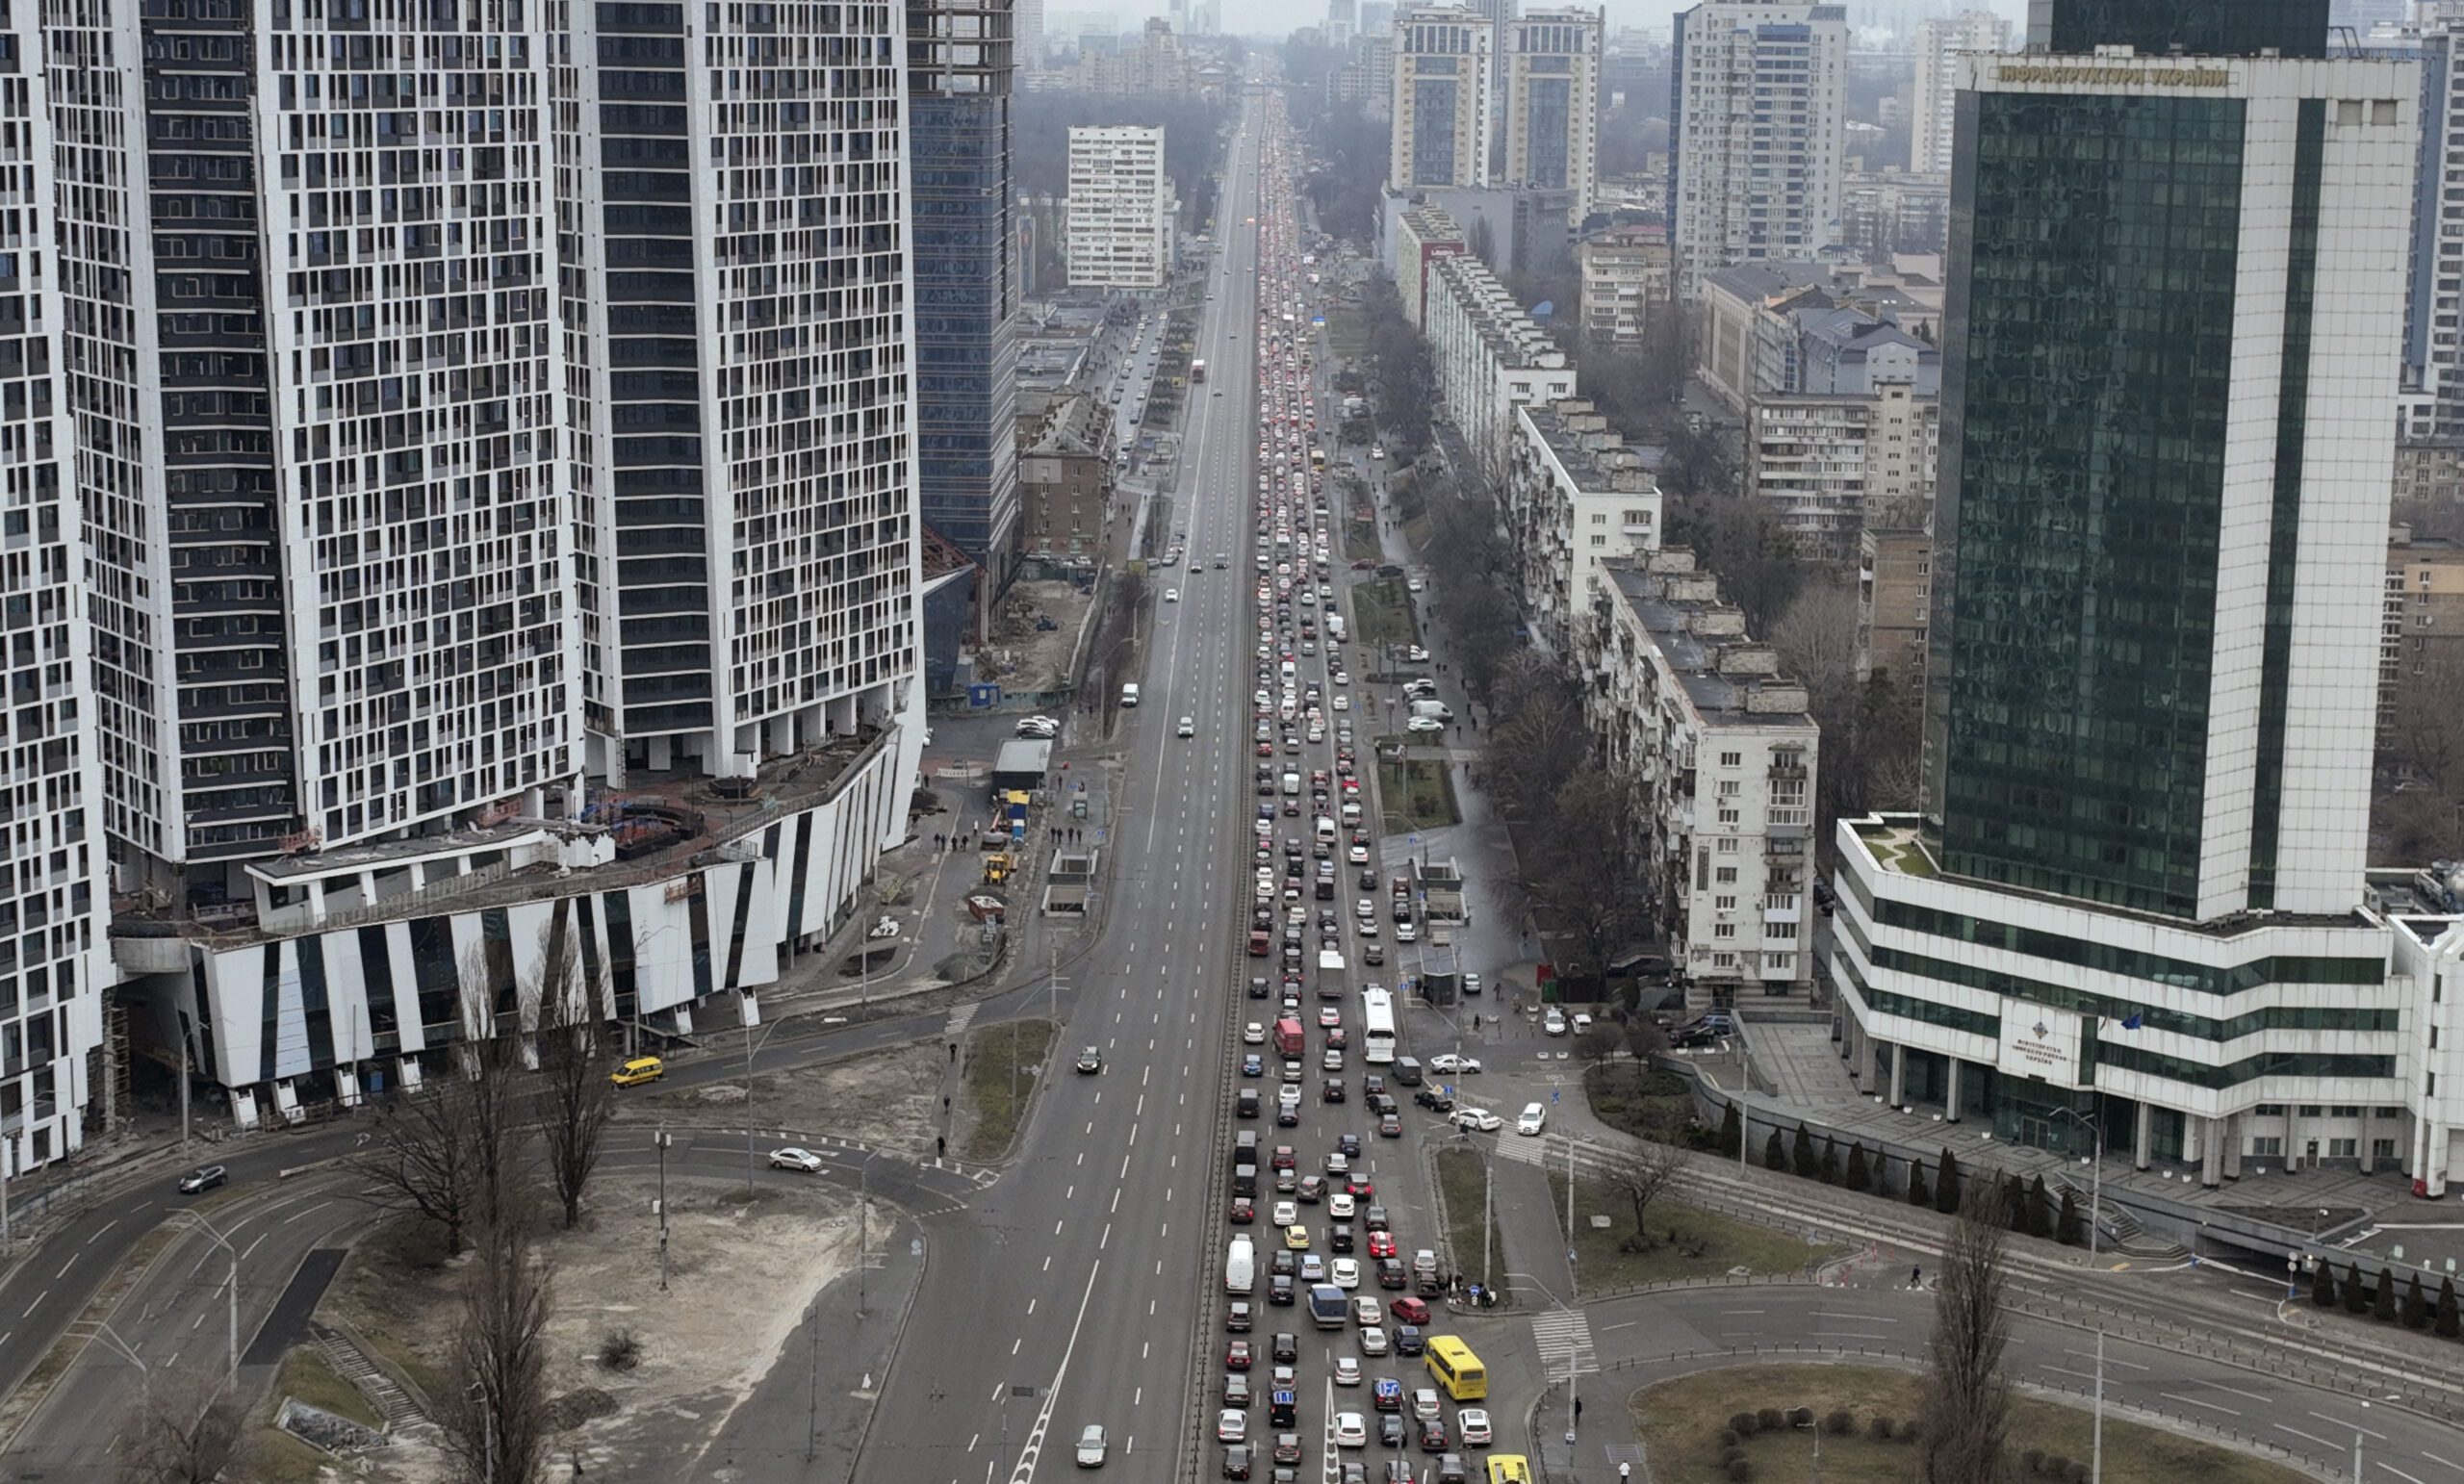 Ukraine Tensions Photo Gallery